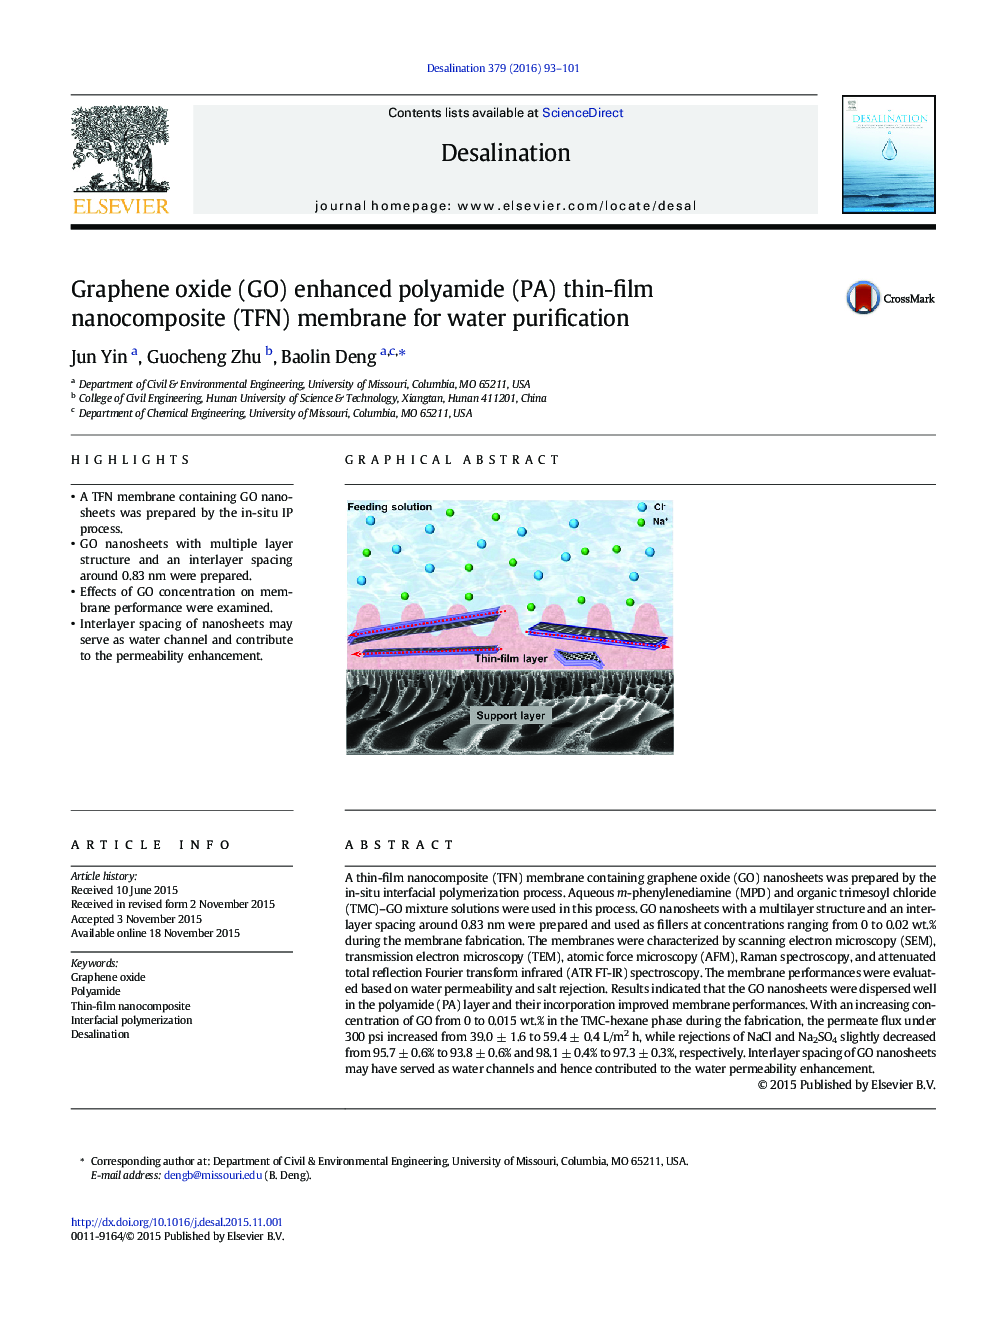 Graphene oxide (GO) enhanced polyamide (PA) thin-film nanocomposite (TFN) membrane for water purification